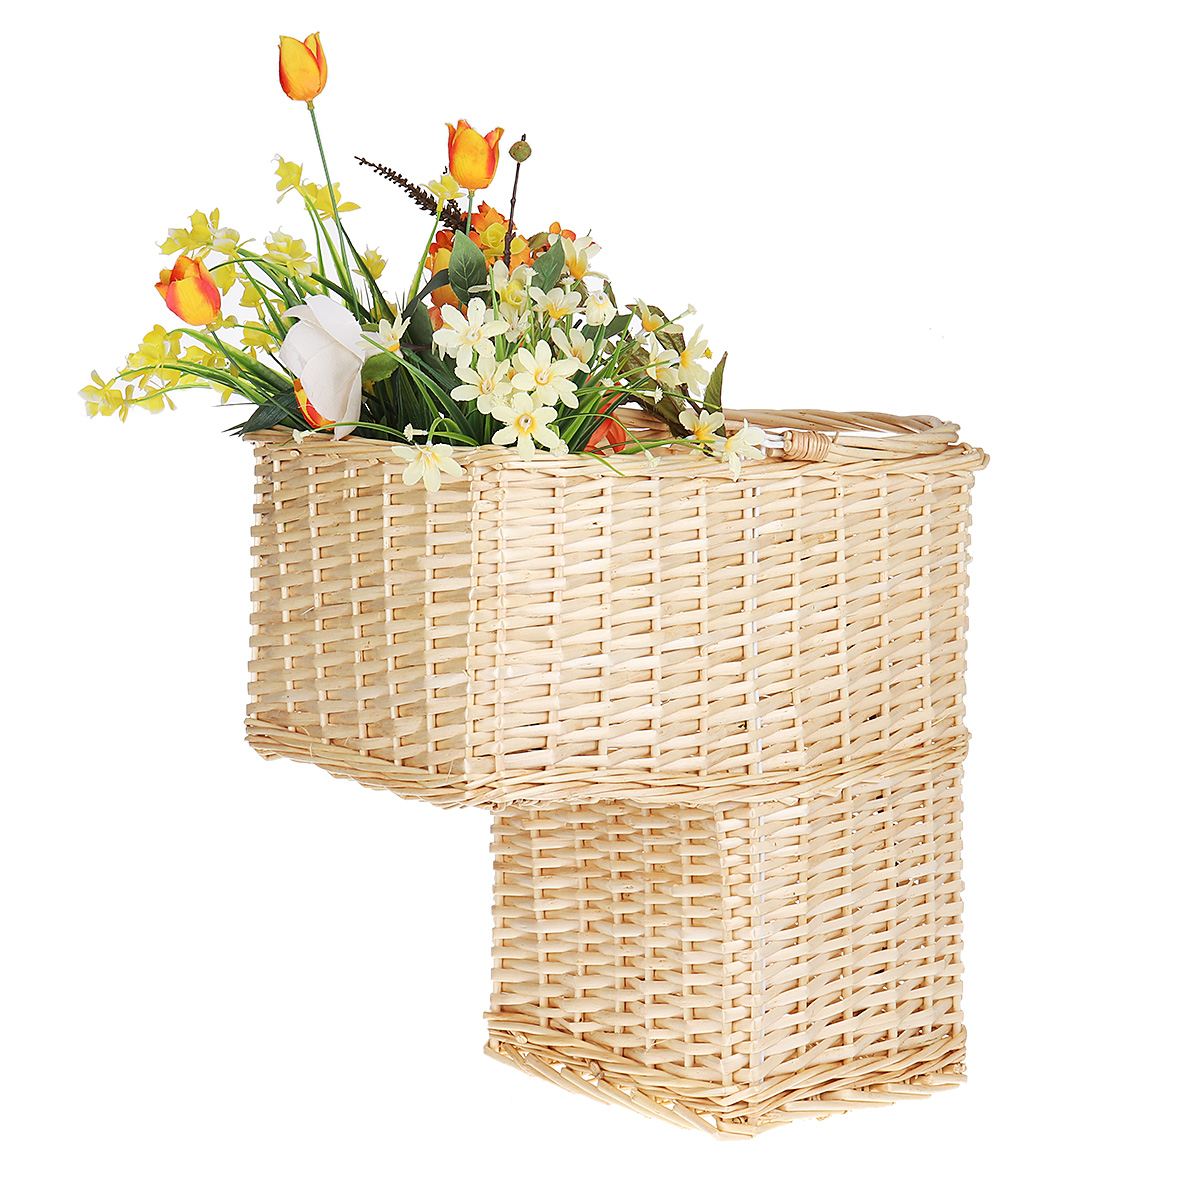 Willow-Woven-Basket-Box-Seagrass-Storage-Hamper-Laundry-Holder-Home-Organizer-1688975-4